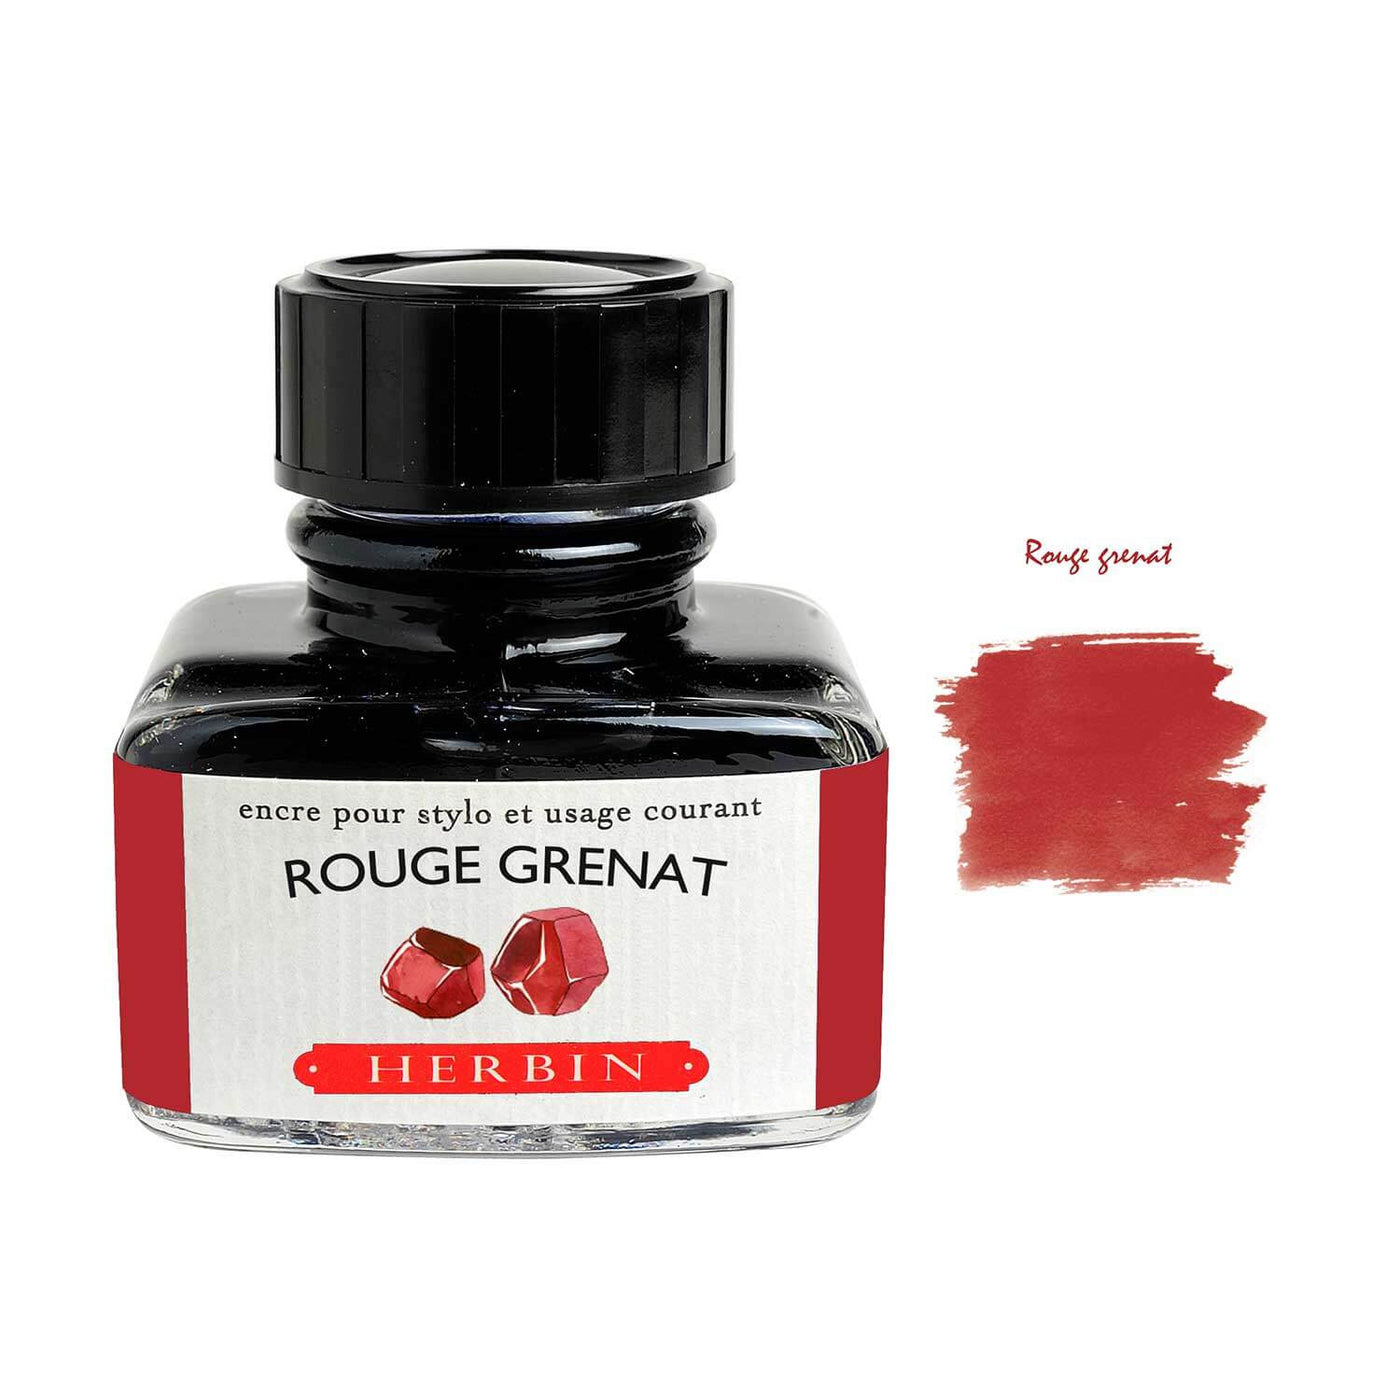 J Herbin "D" Series Ink Bottle Rouge Grenat (Burgundy) - 30ml 1